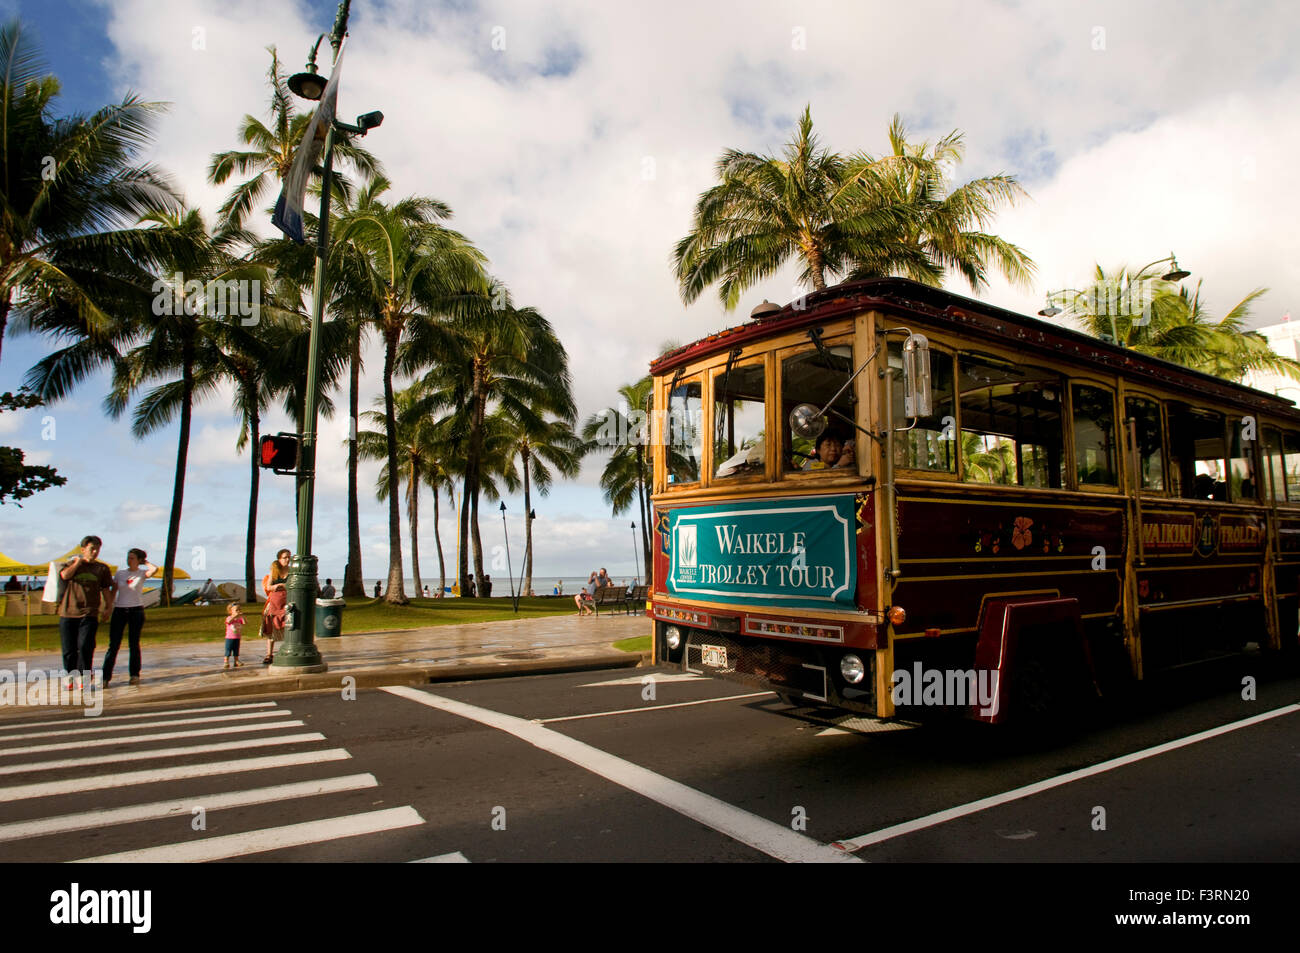 Waikiki Trolley, bus touristique shopping qui passe entre Waikiki et Honolulu. O'ahu. Waikiki Trolley Trolley est un tra à base d'Oahu Banque D'Images